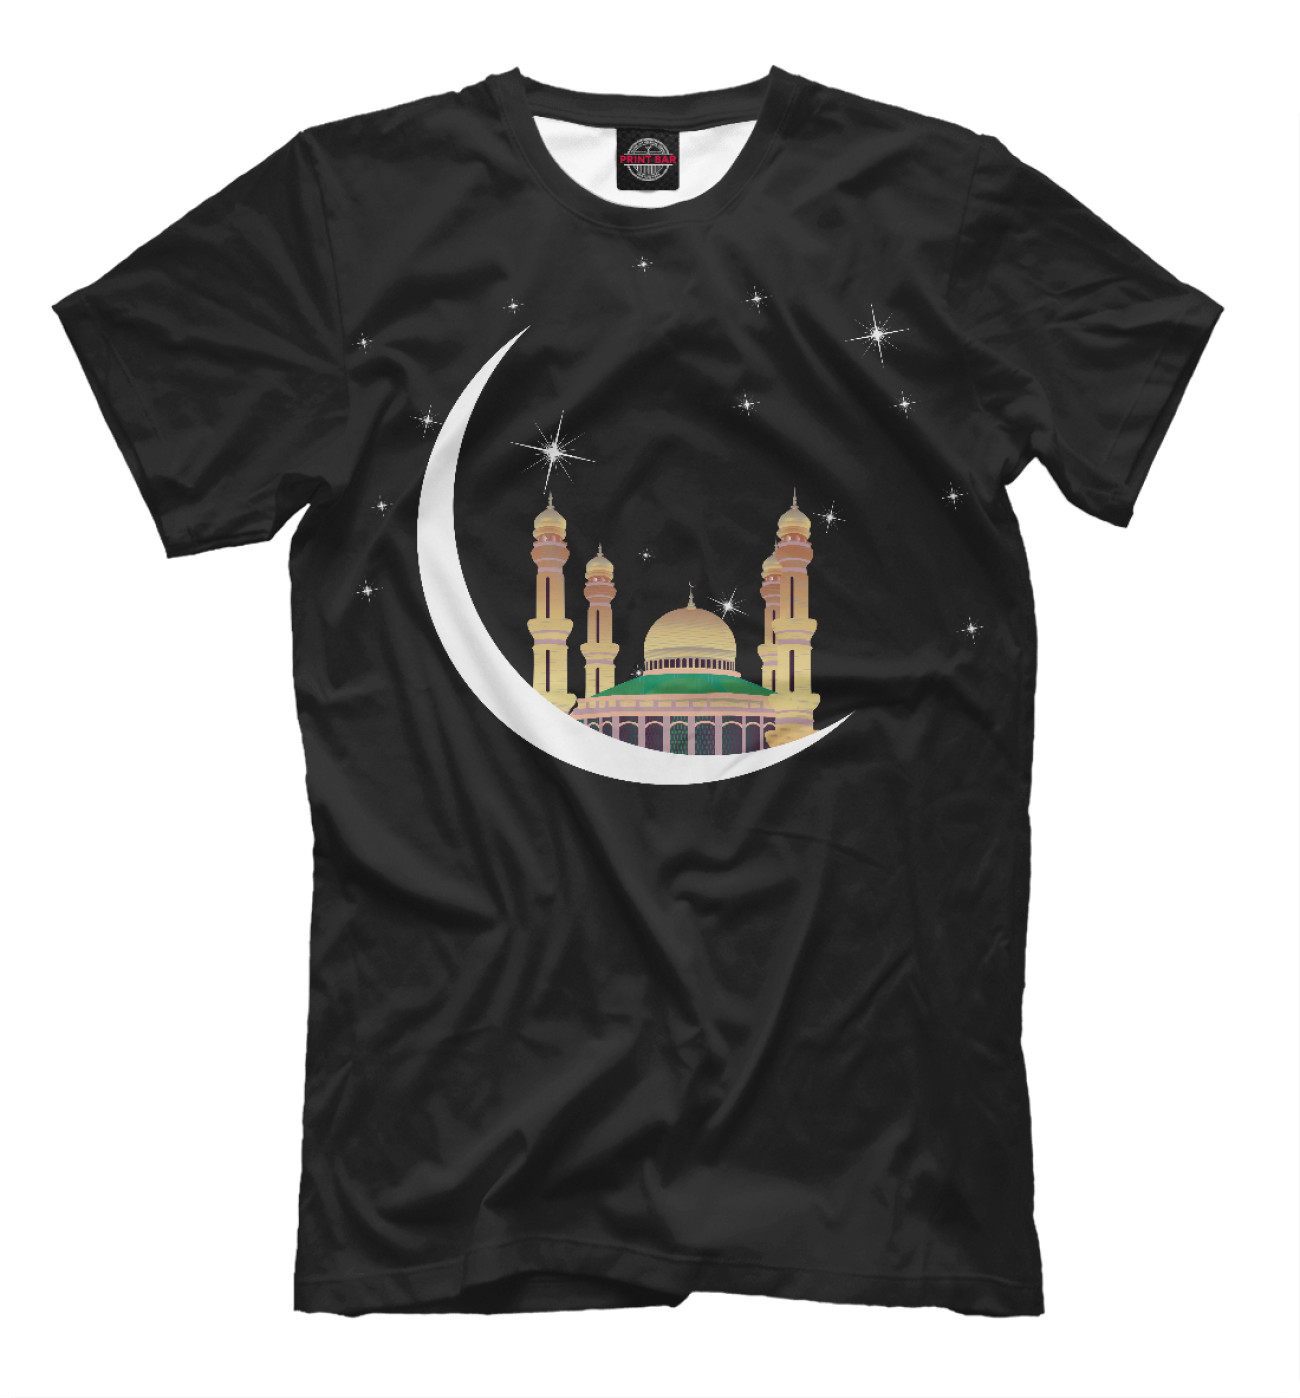 Мужская Футболка Мечеть, артикул: ISL-857543-fut-2